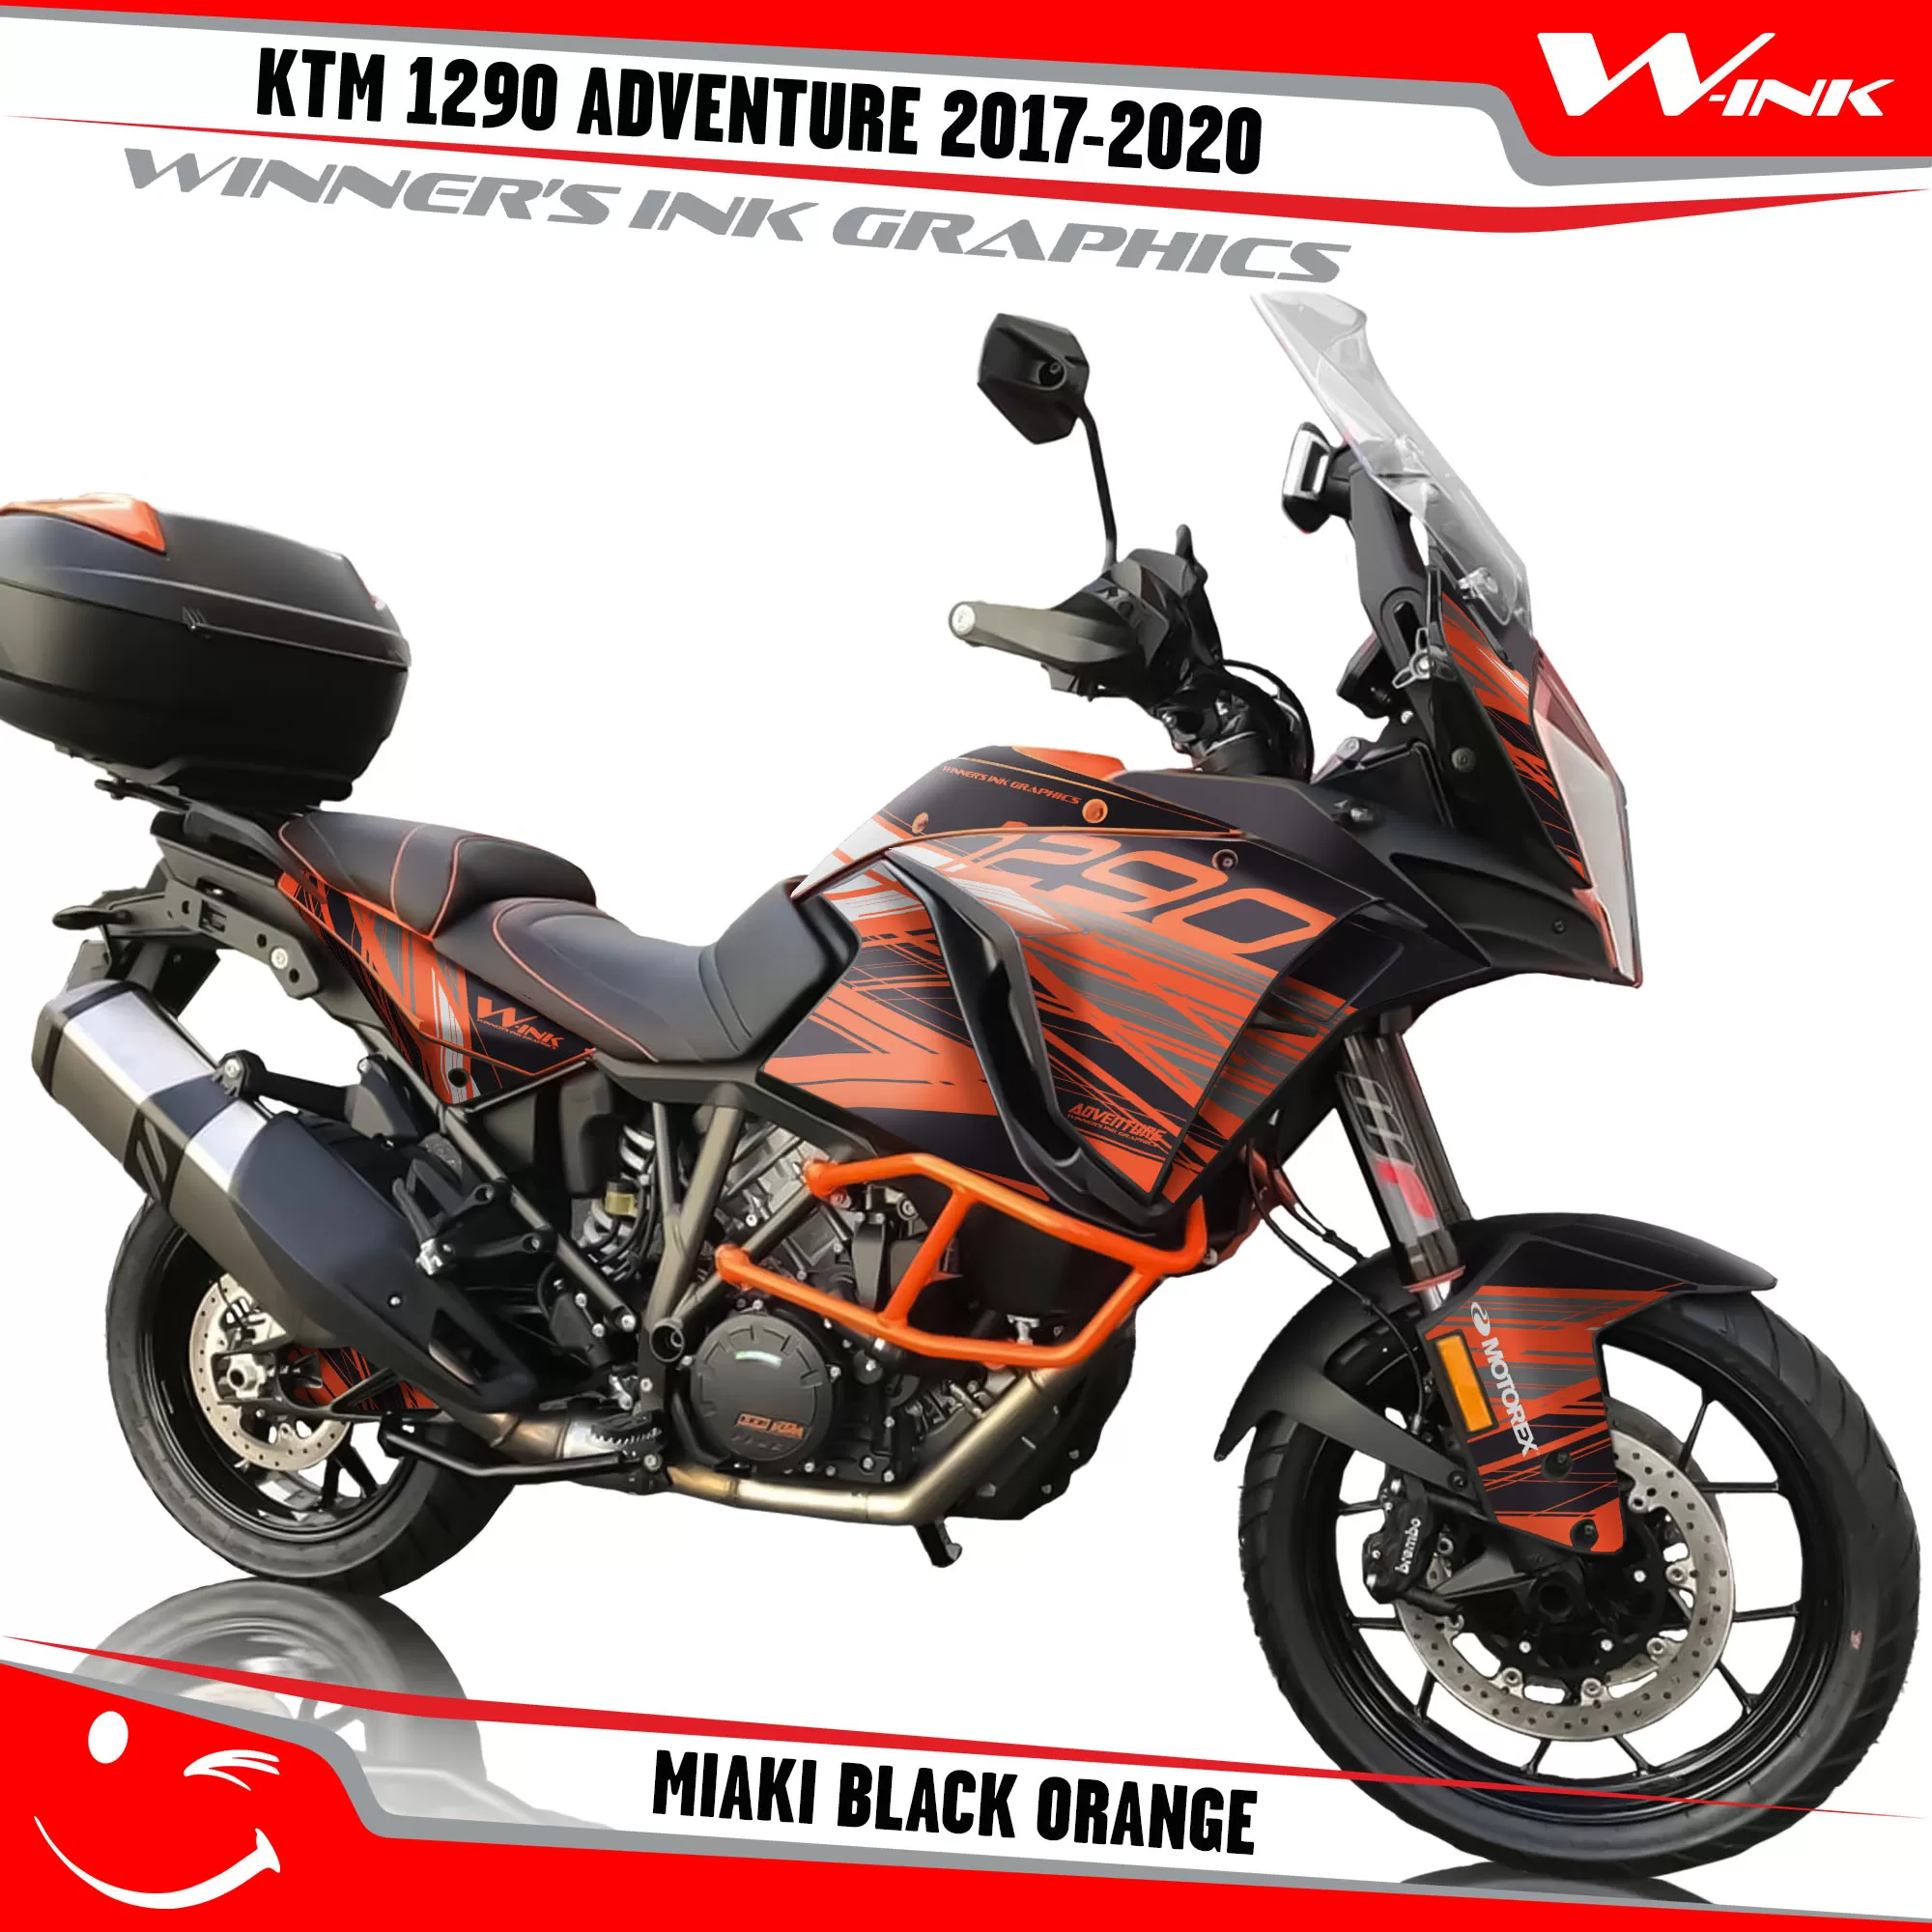 KTM-Adventure-1290-2017-2018-2019-2020-graphics-kit-and-decals-Miaki-Black-Orange